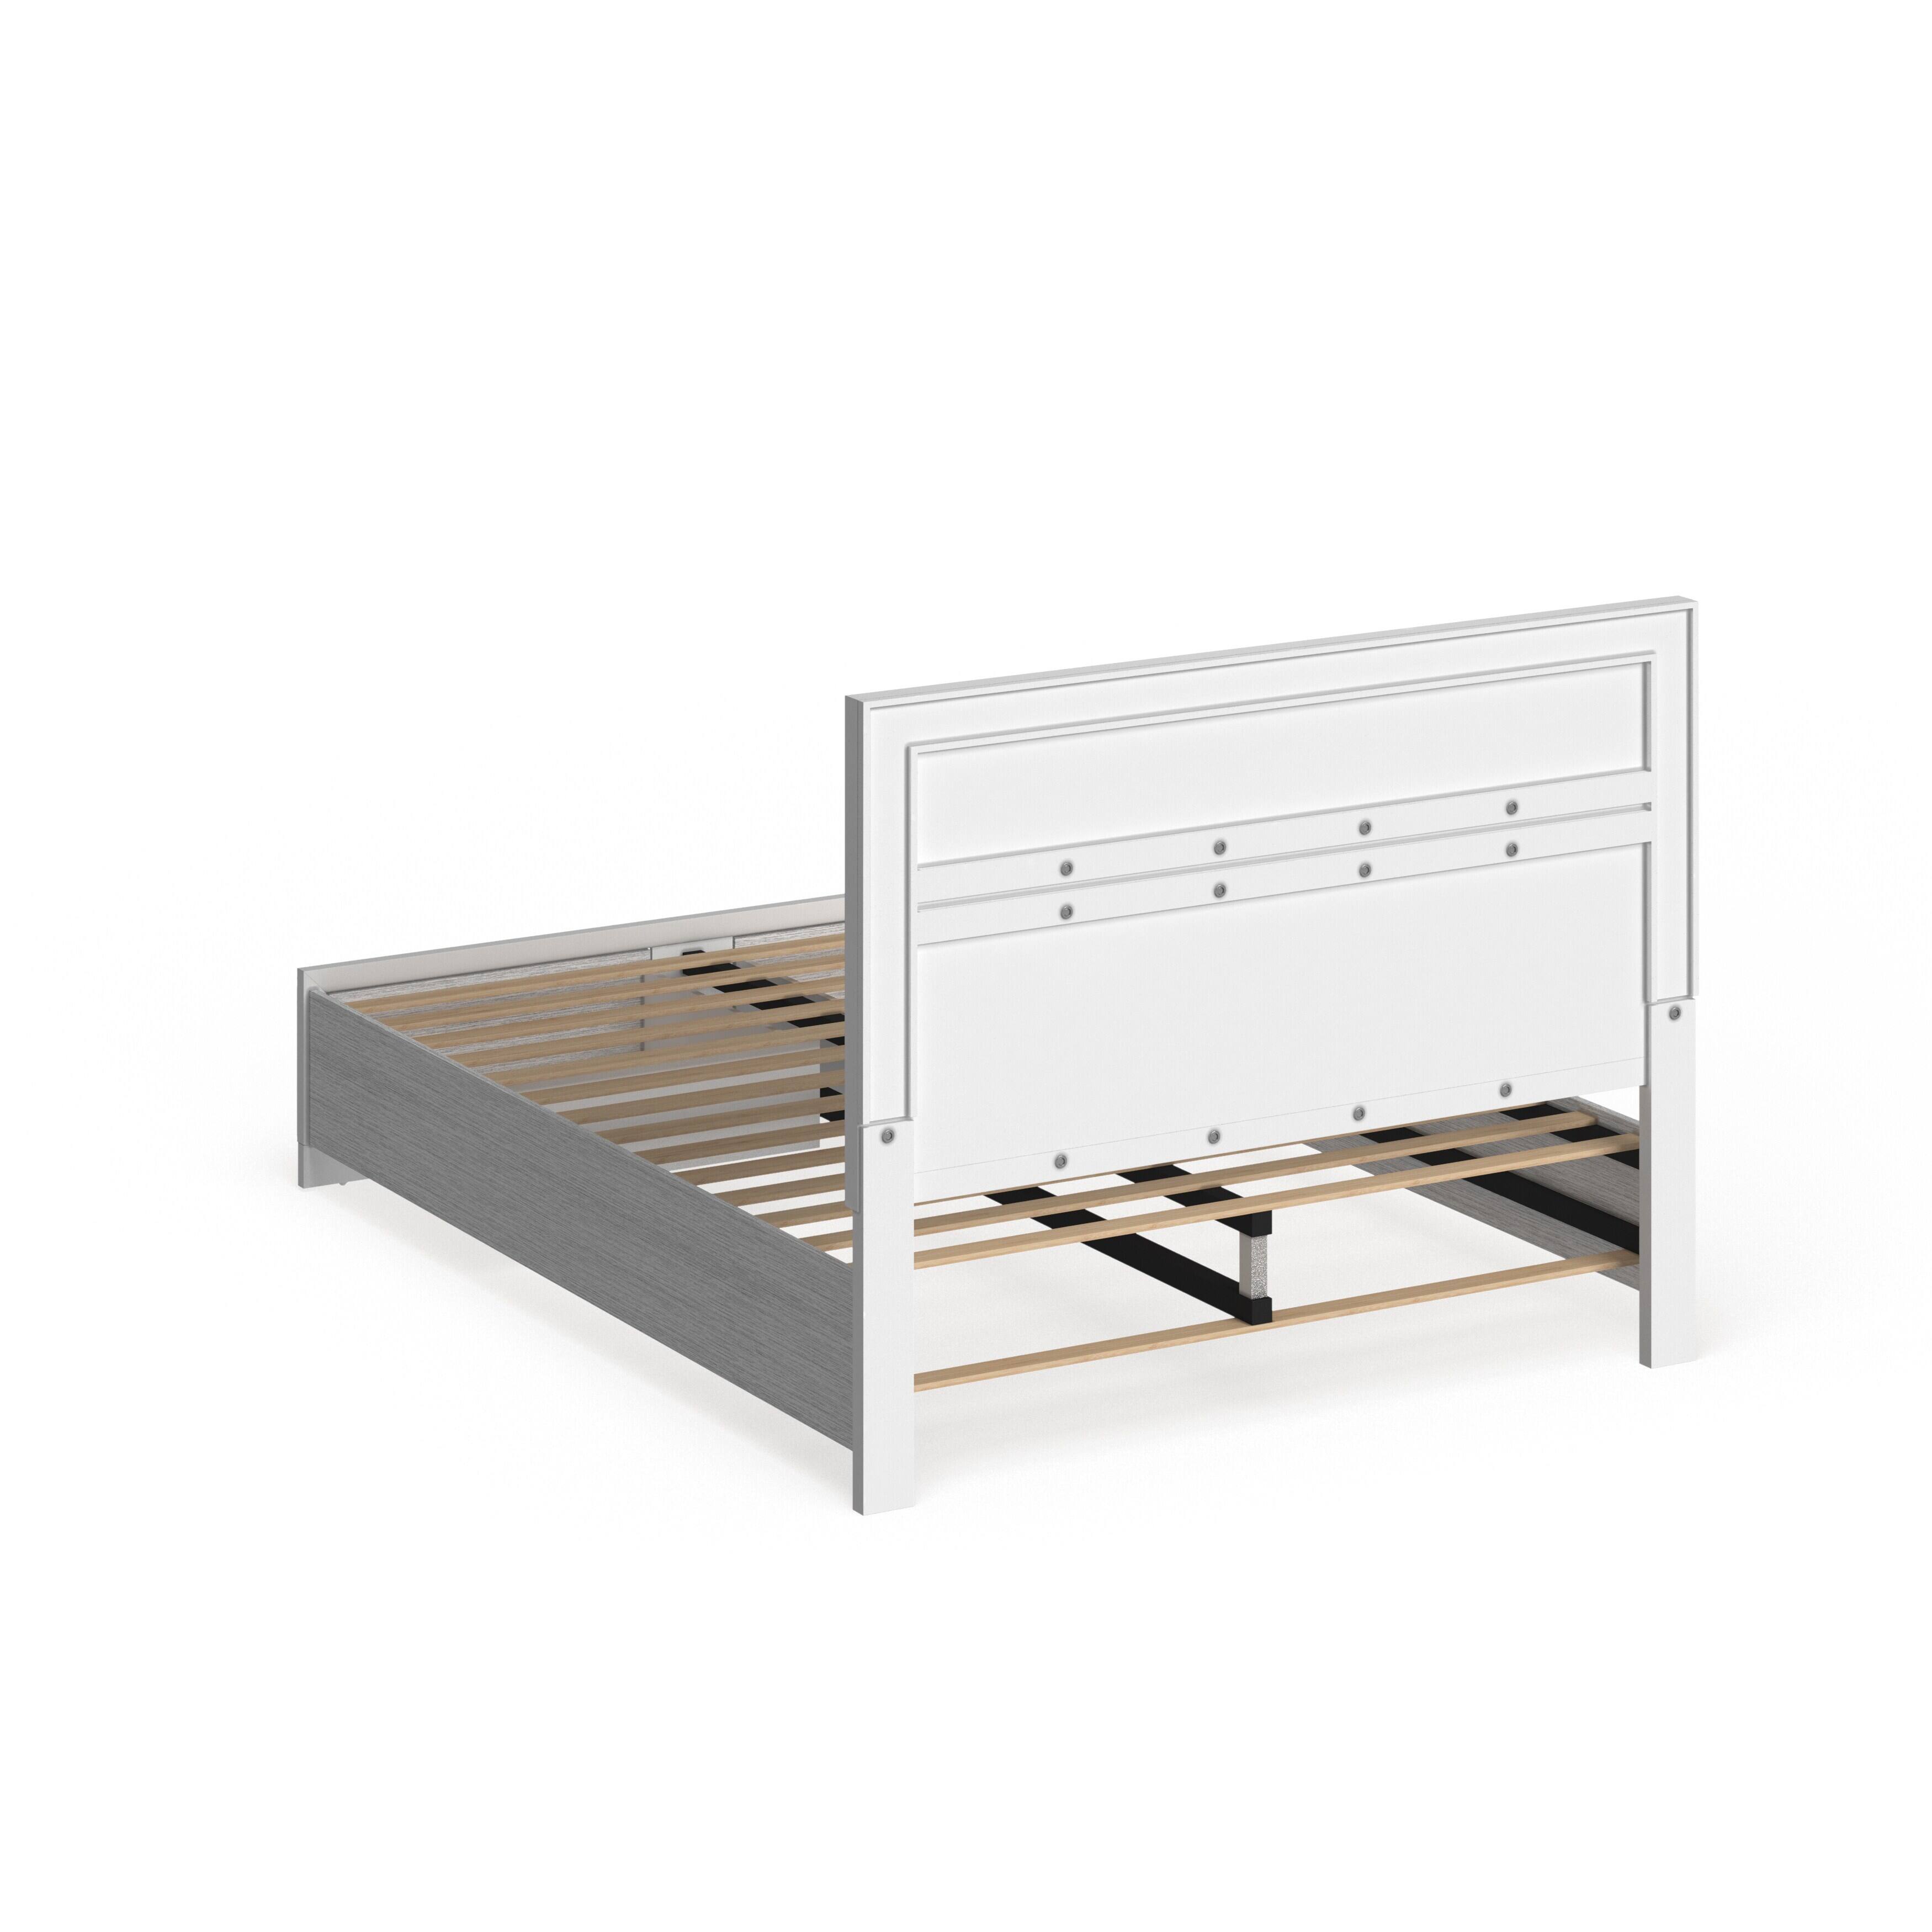 Acme Furniture Naima Bed with Storage, White